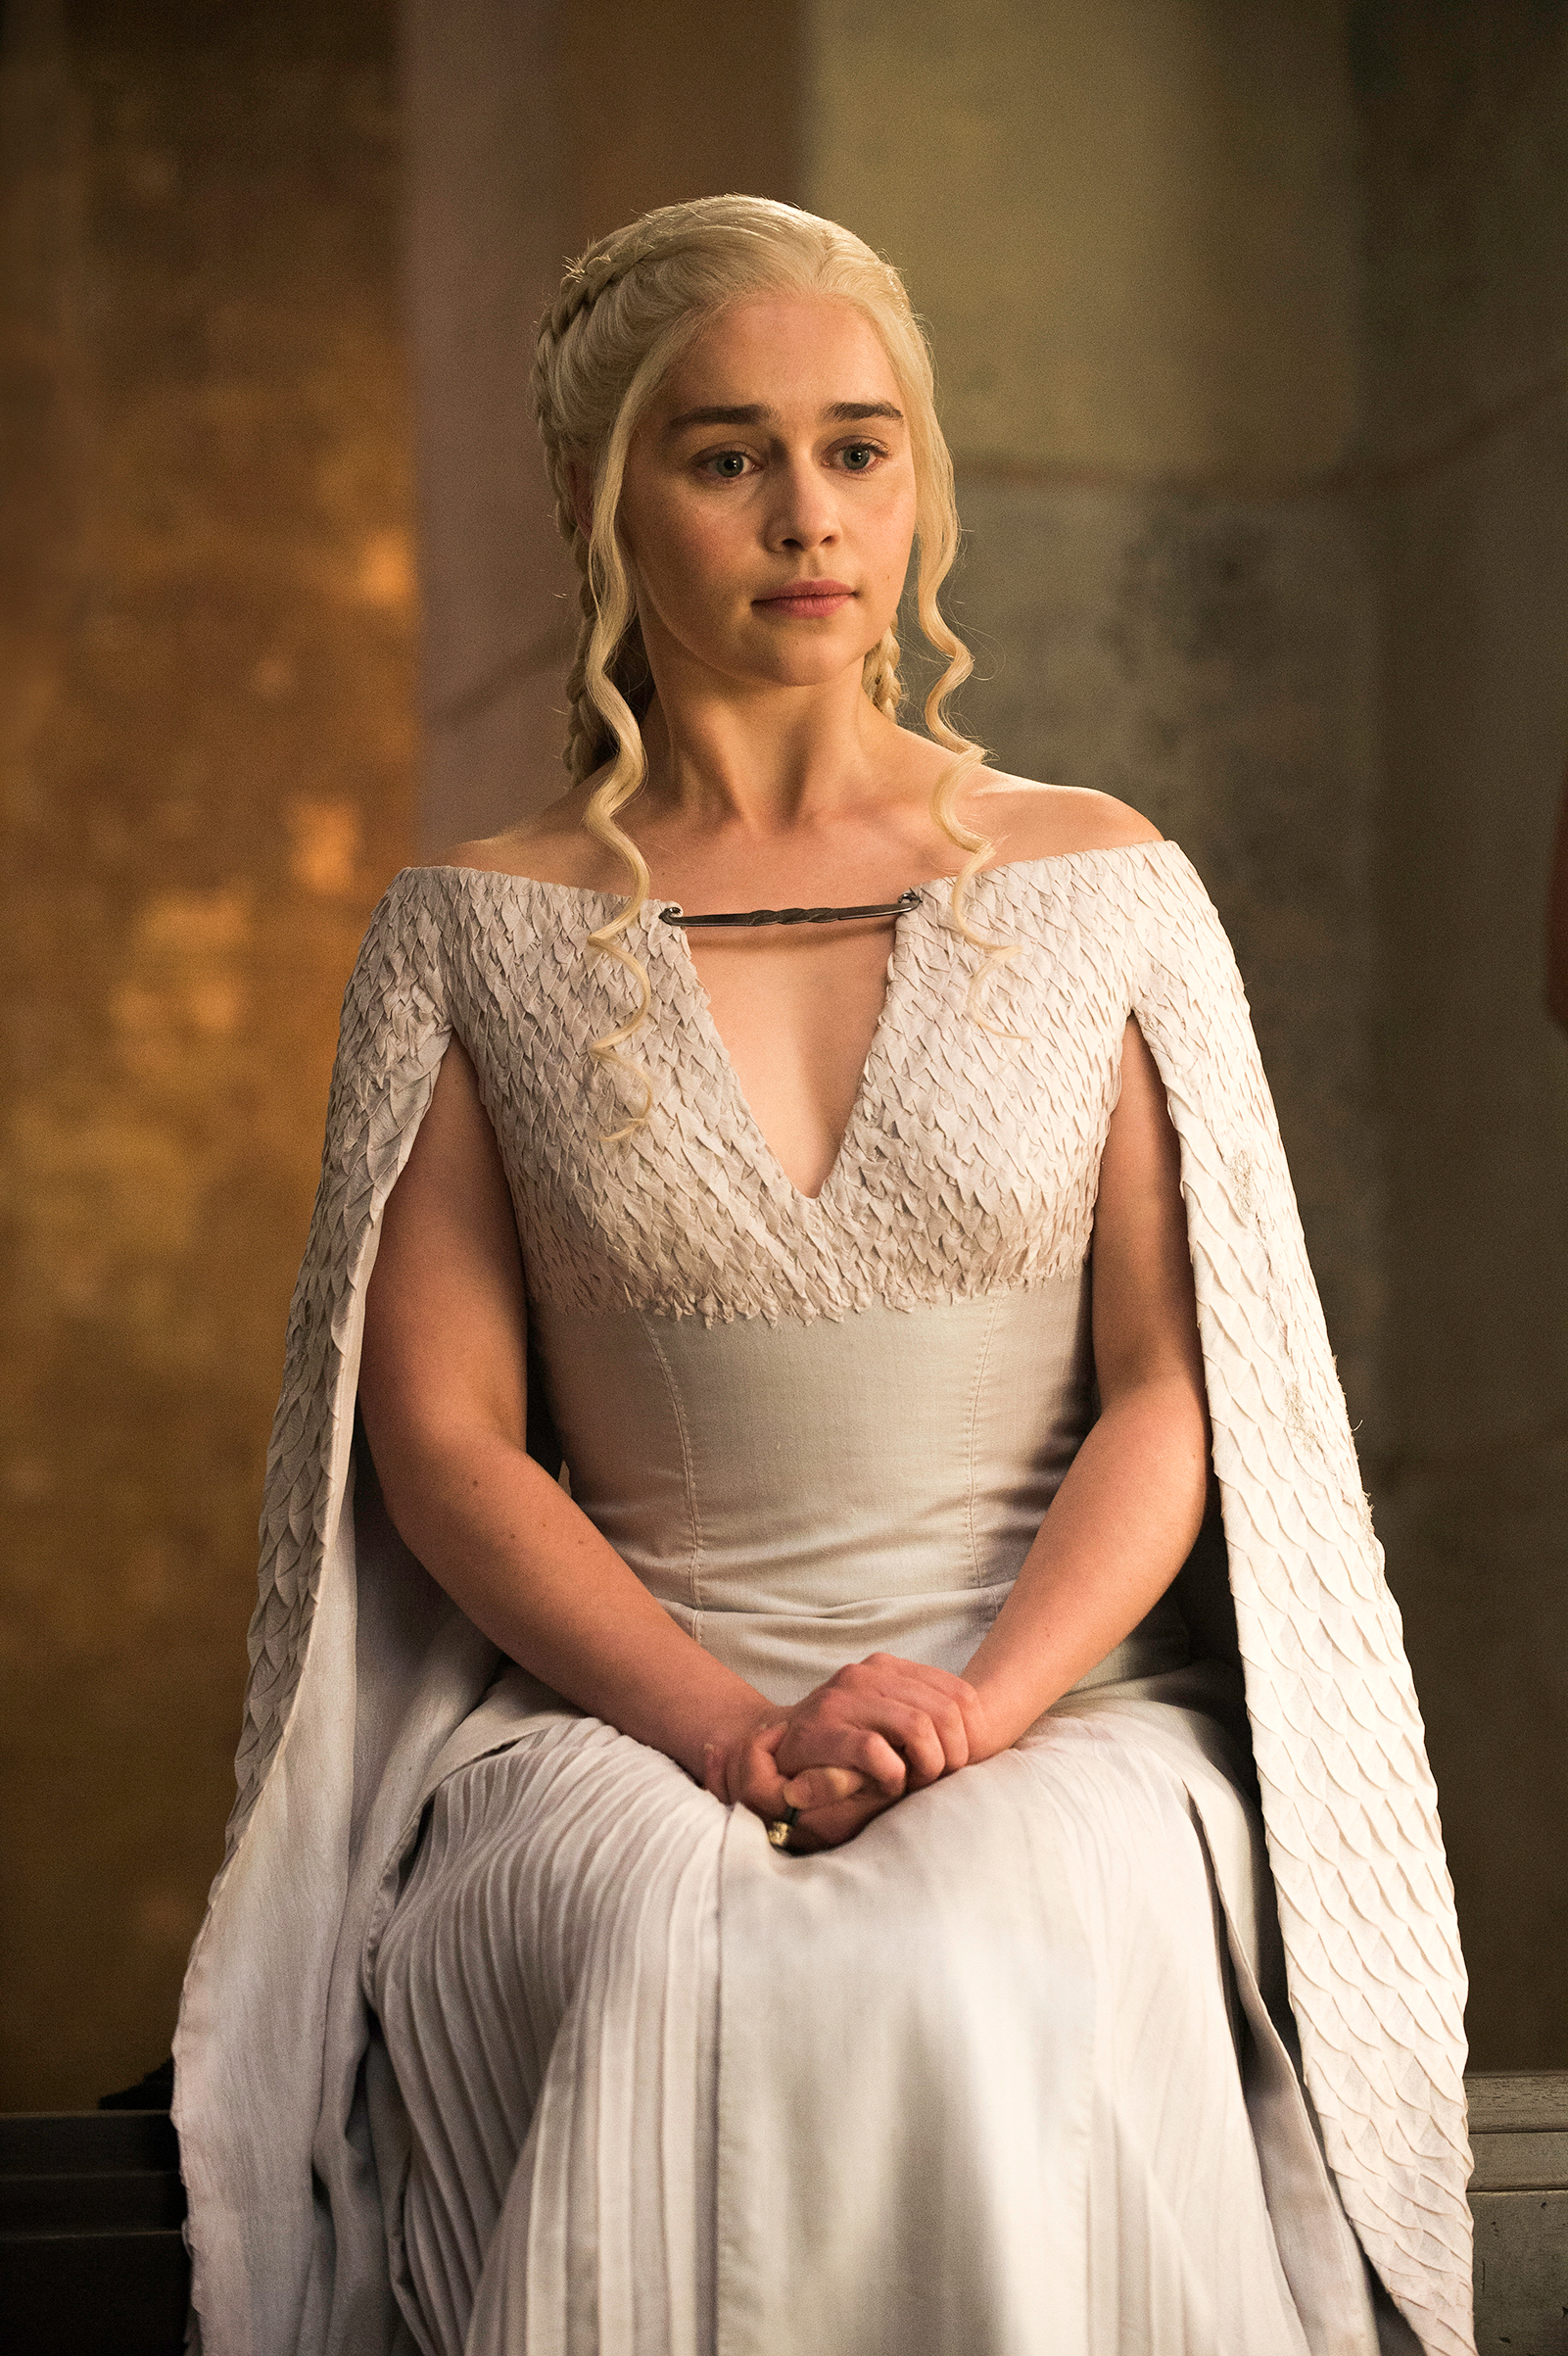 Top 10 most beautiful Game of Thrones actresses - Daenerys Targaryen